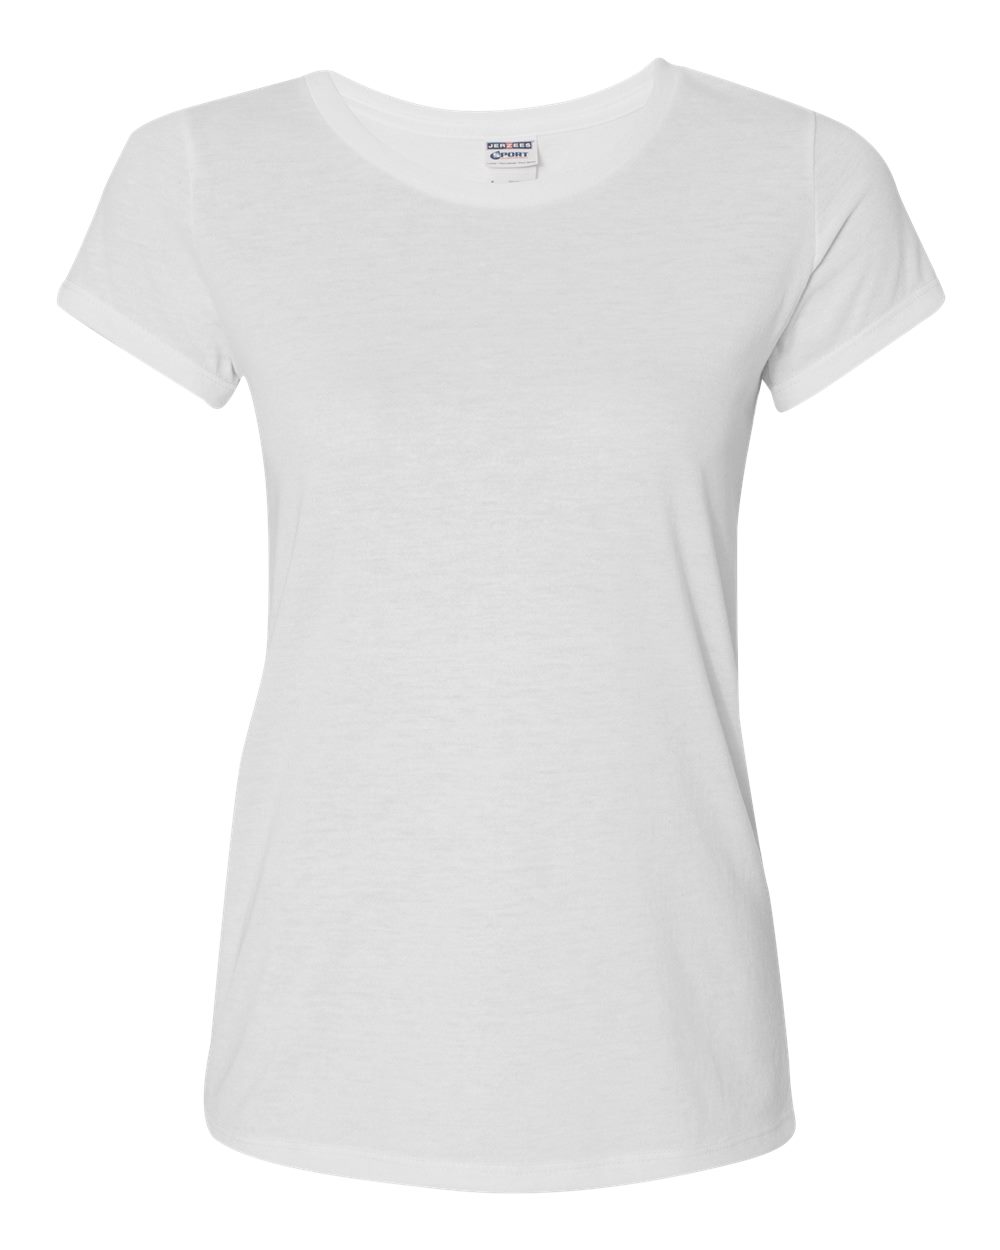 JERZEES - Dri-Power® Sport Women's Short Sleeve T-Shirt - 21WR - BULK SALE - QTY 8 - $23.00 Ideal for sublimation printing